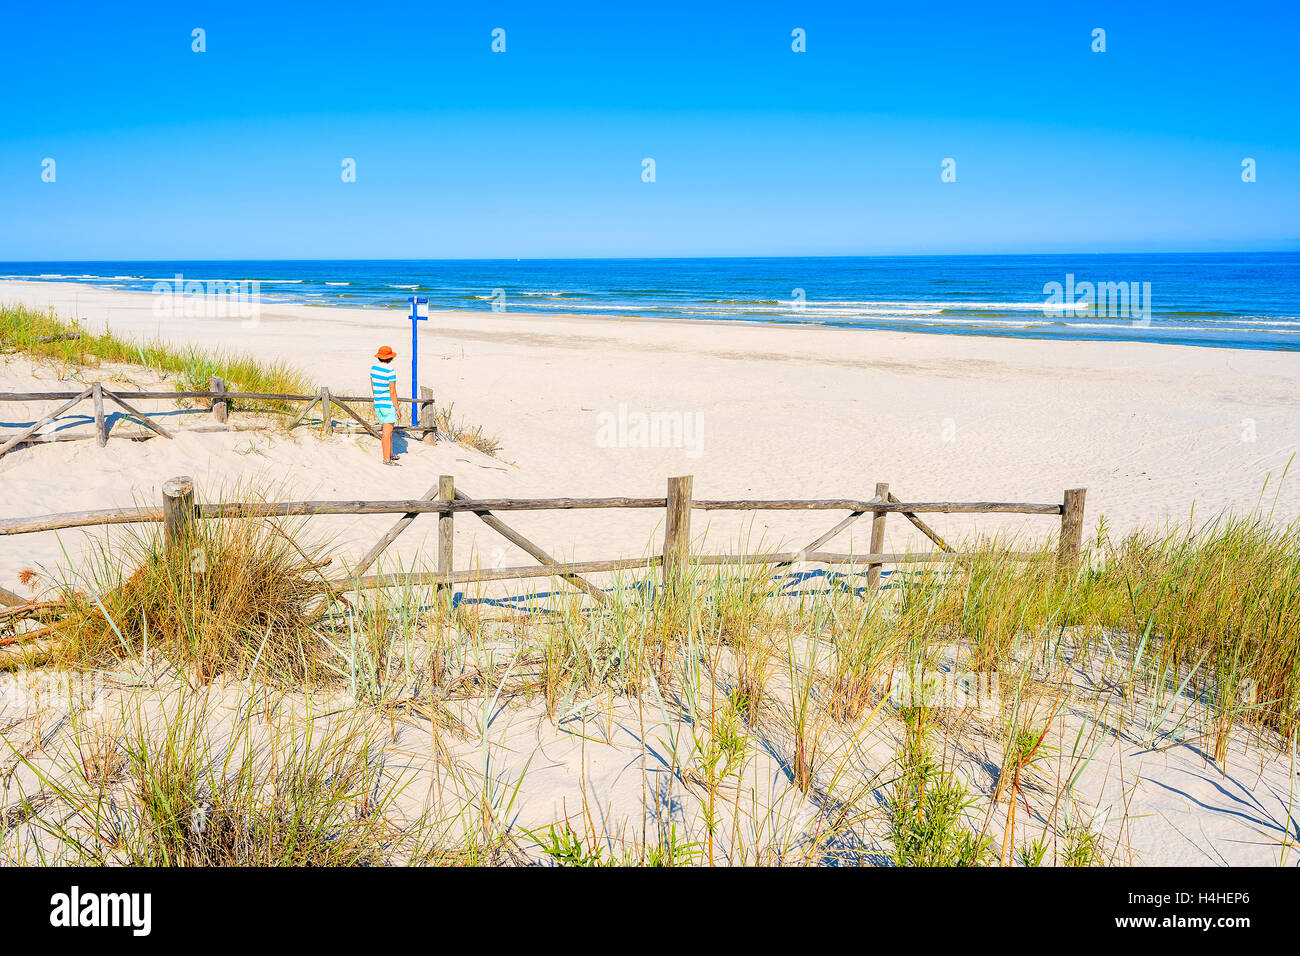 Young woman tourist standing at entrance to beautiful sandy beach in Lubiatowo coastal village, Baltic Sea, Poland Stock Photo